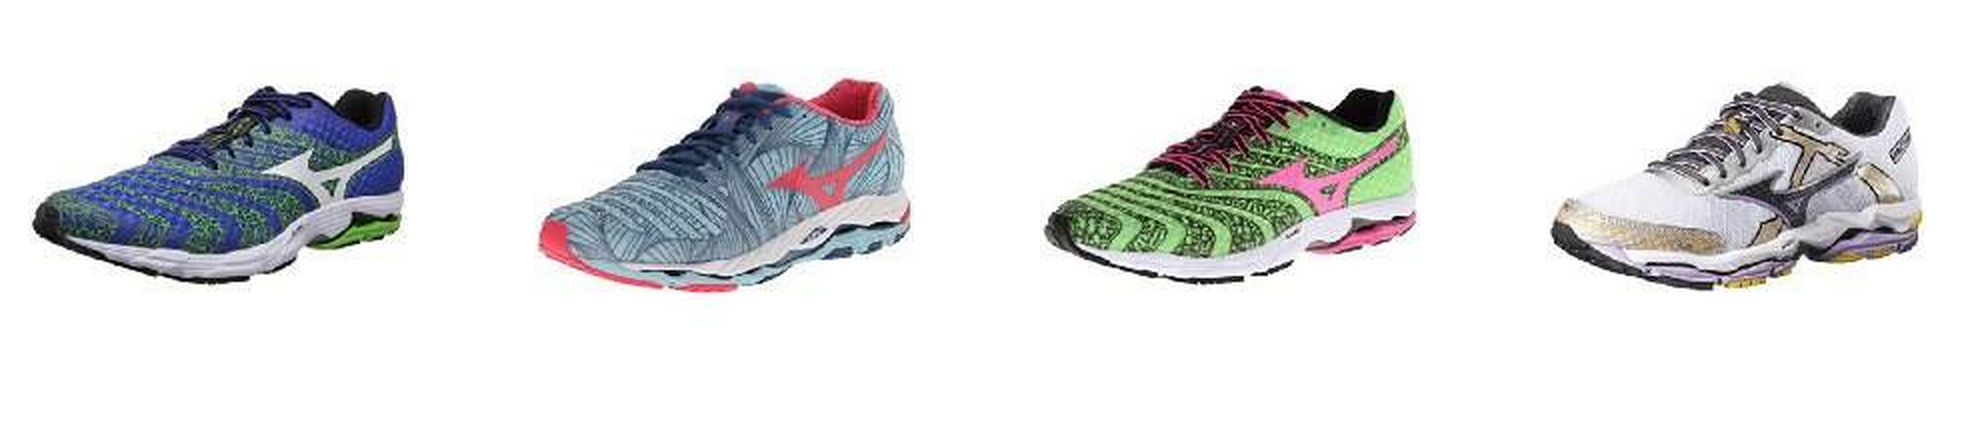 mizuno running shoes womens sale